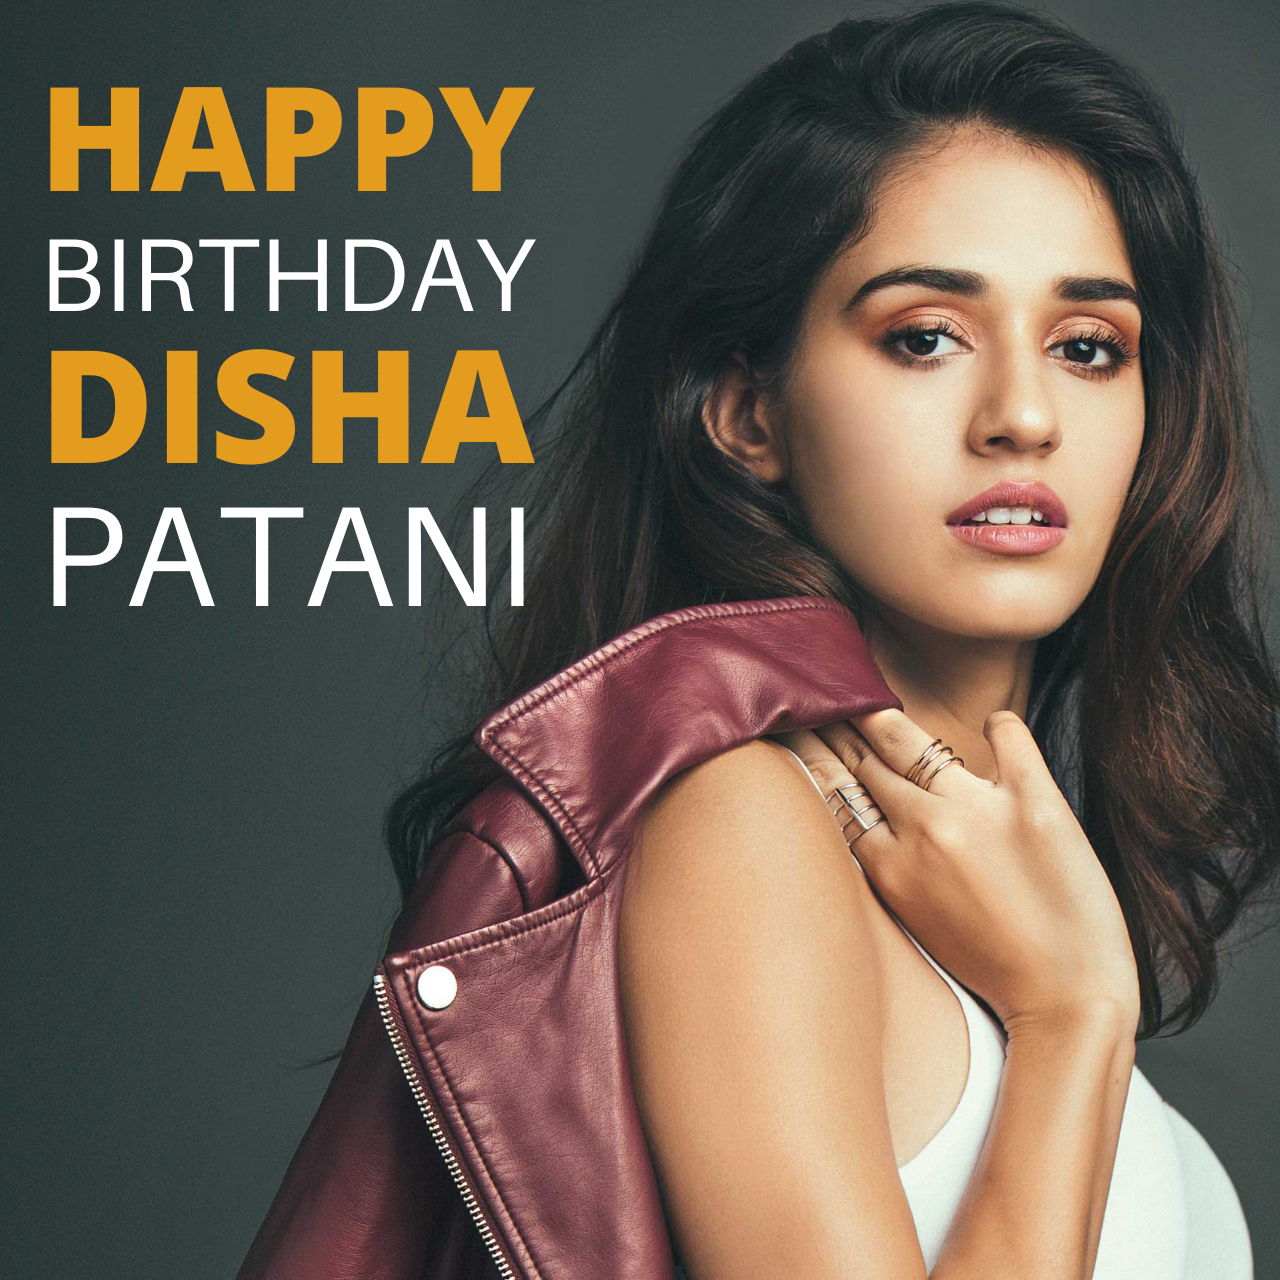 Happy Birthday Disha Patani Wishes, Photos (pics), Images, and WhatsApp Status Video Download